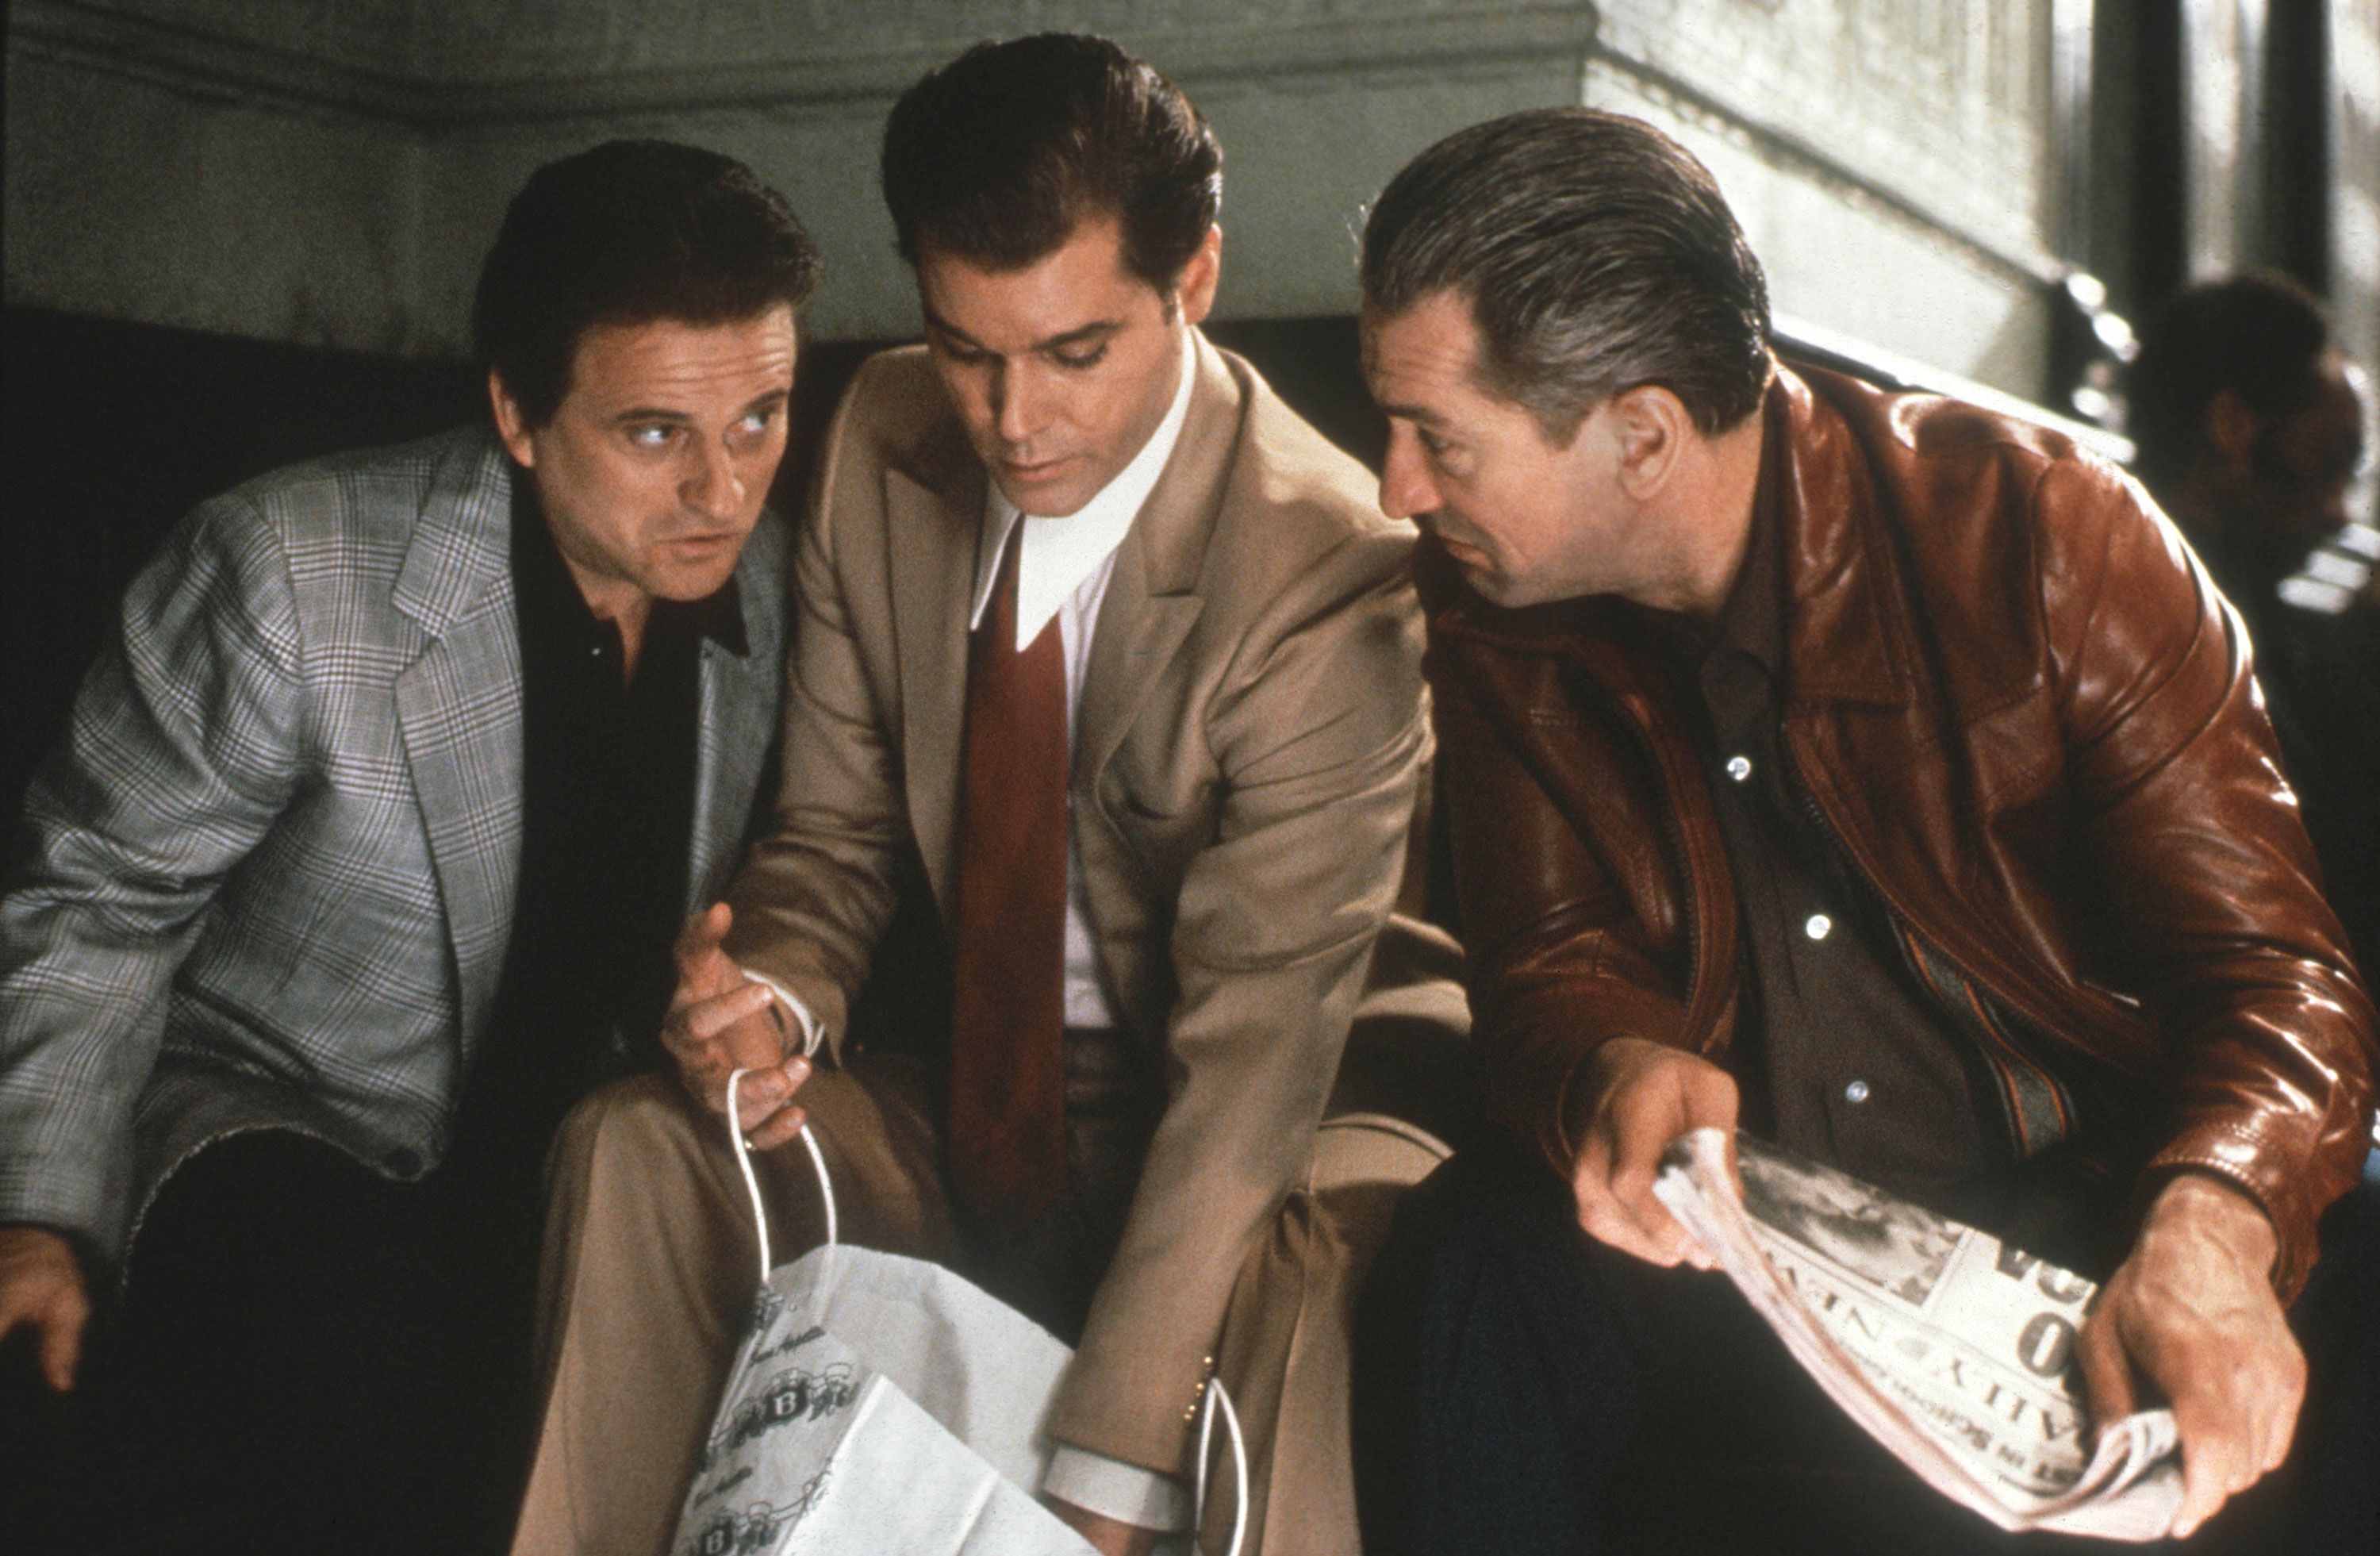 (L-R) Joe Pesci, Ray Liotta and Robert De Niro in "Goodfellas".